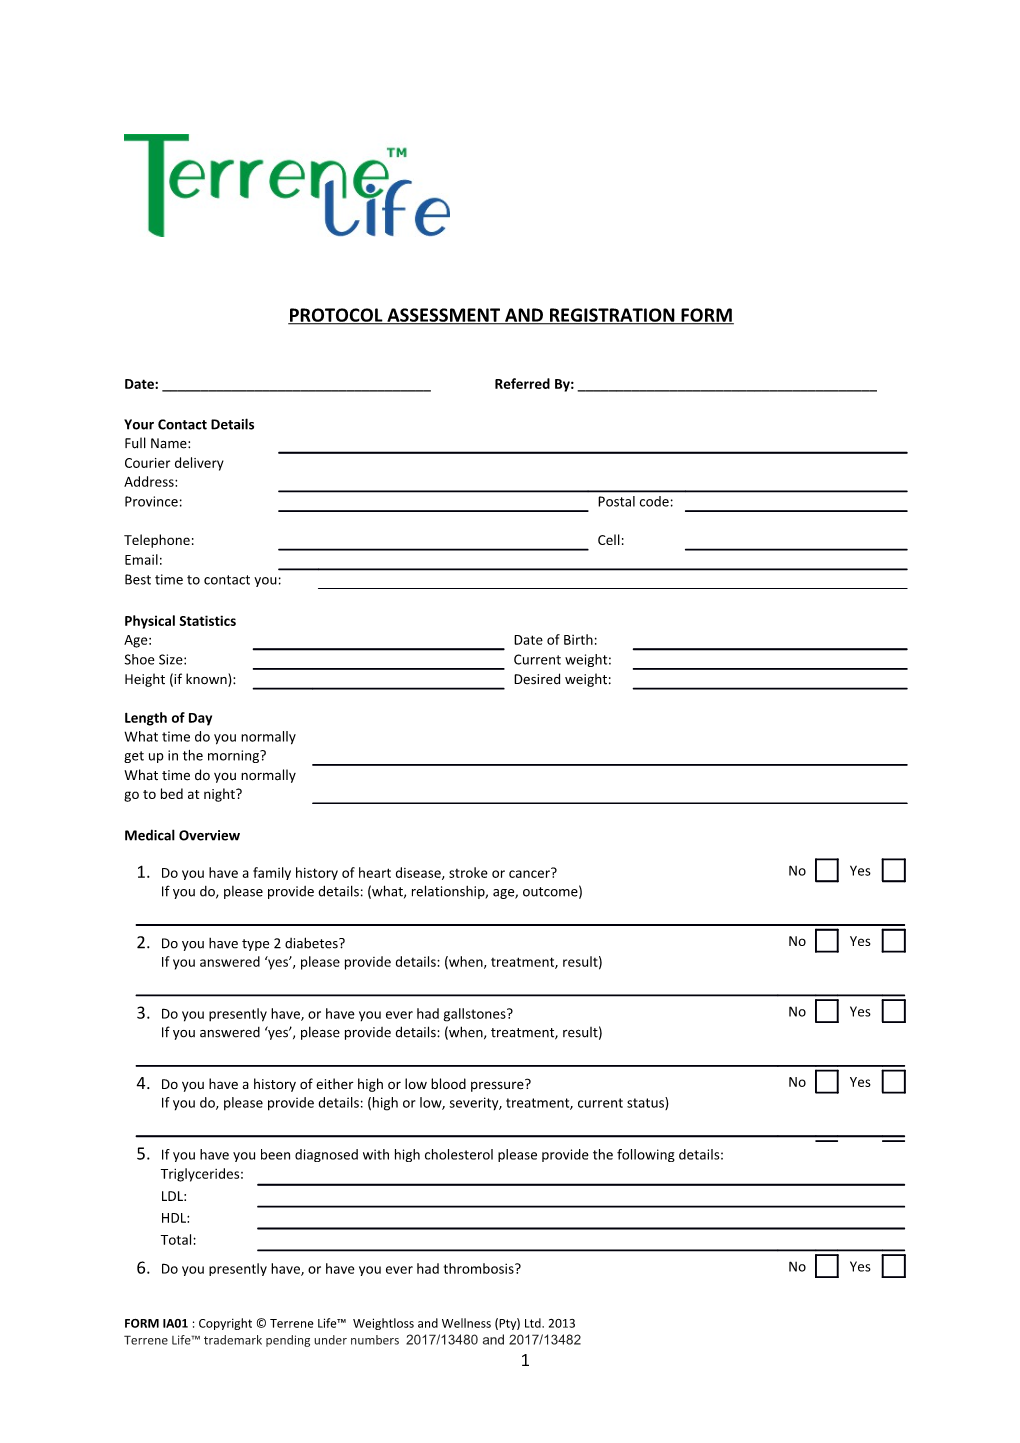 Protocol Assessment and Registration Form